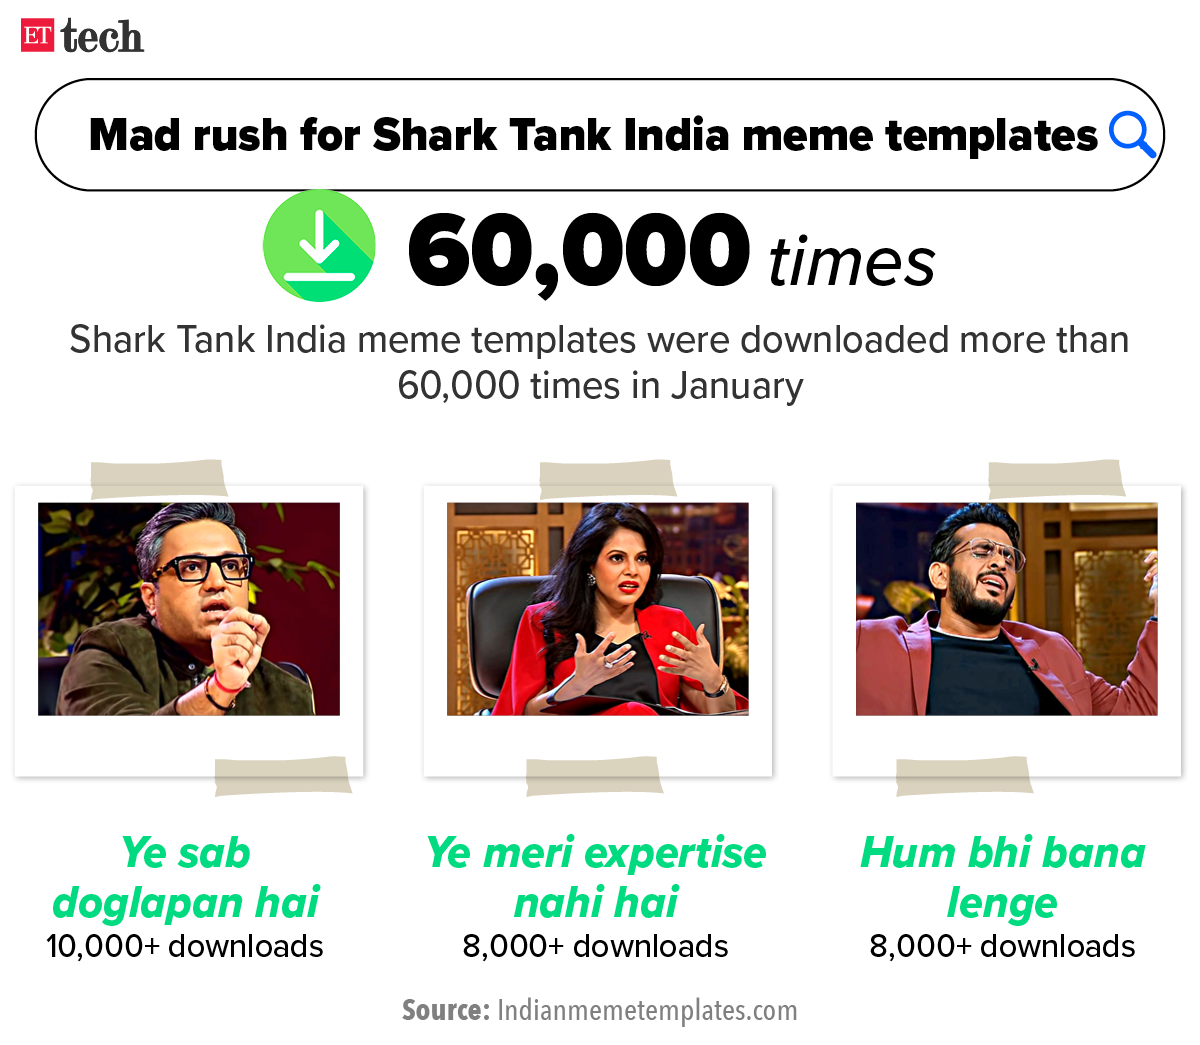 Shark Tank India: Ashneer Grover, Aman Gupta fuel Shark Tank meme explosion  - The Economic Times